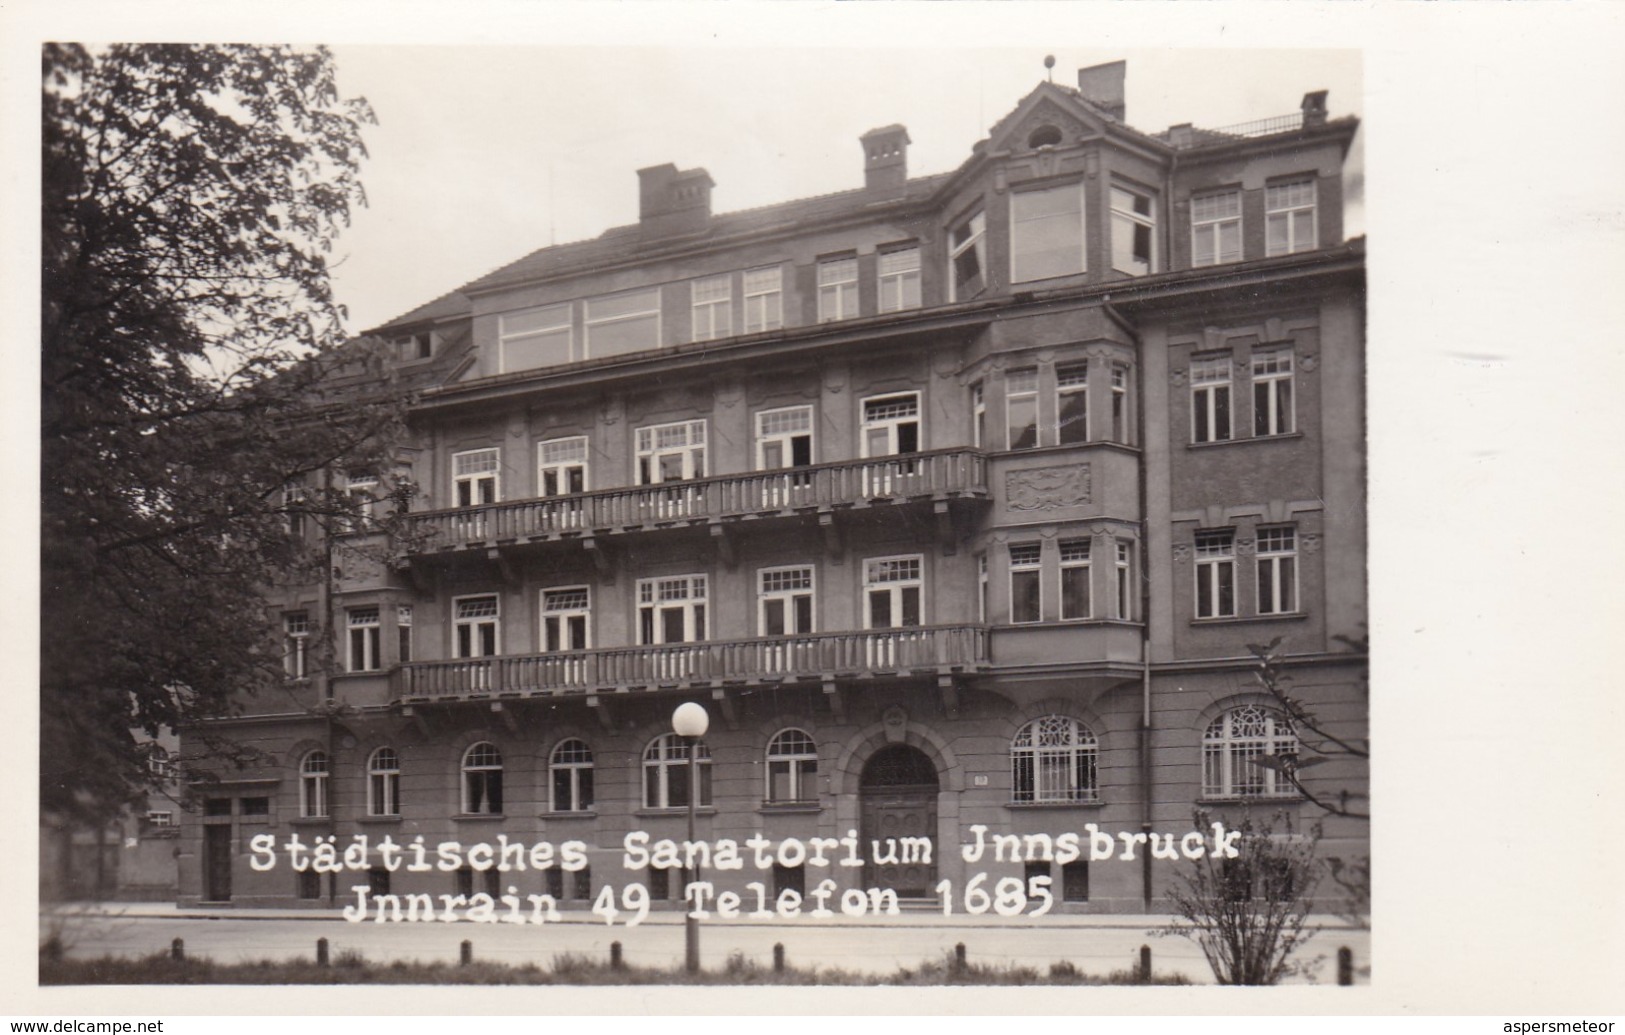 STADTISCHES SANATORIUM INNSBRUC. INNRAI 49 TELEFON 1685. ETCHE PHOTO. YEAR 1949- BLEUP - Innsbruck